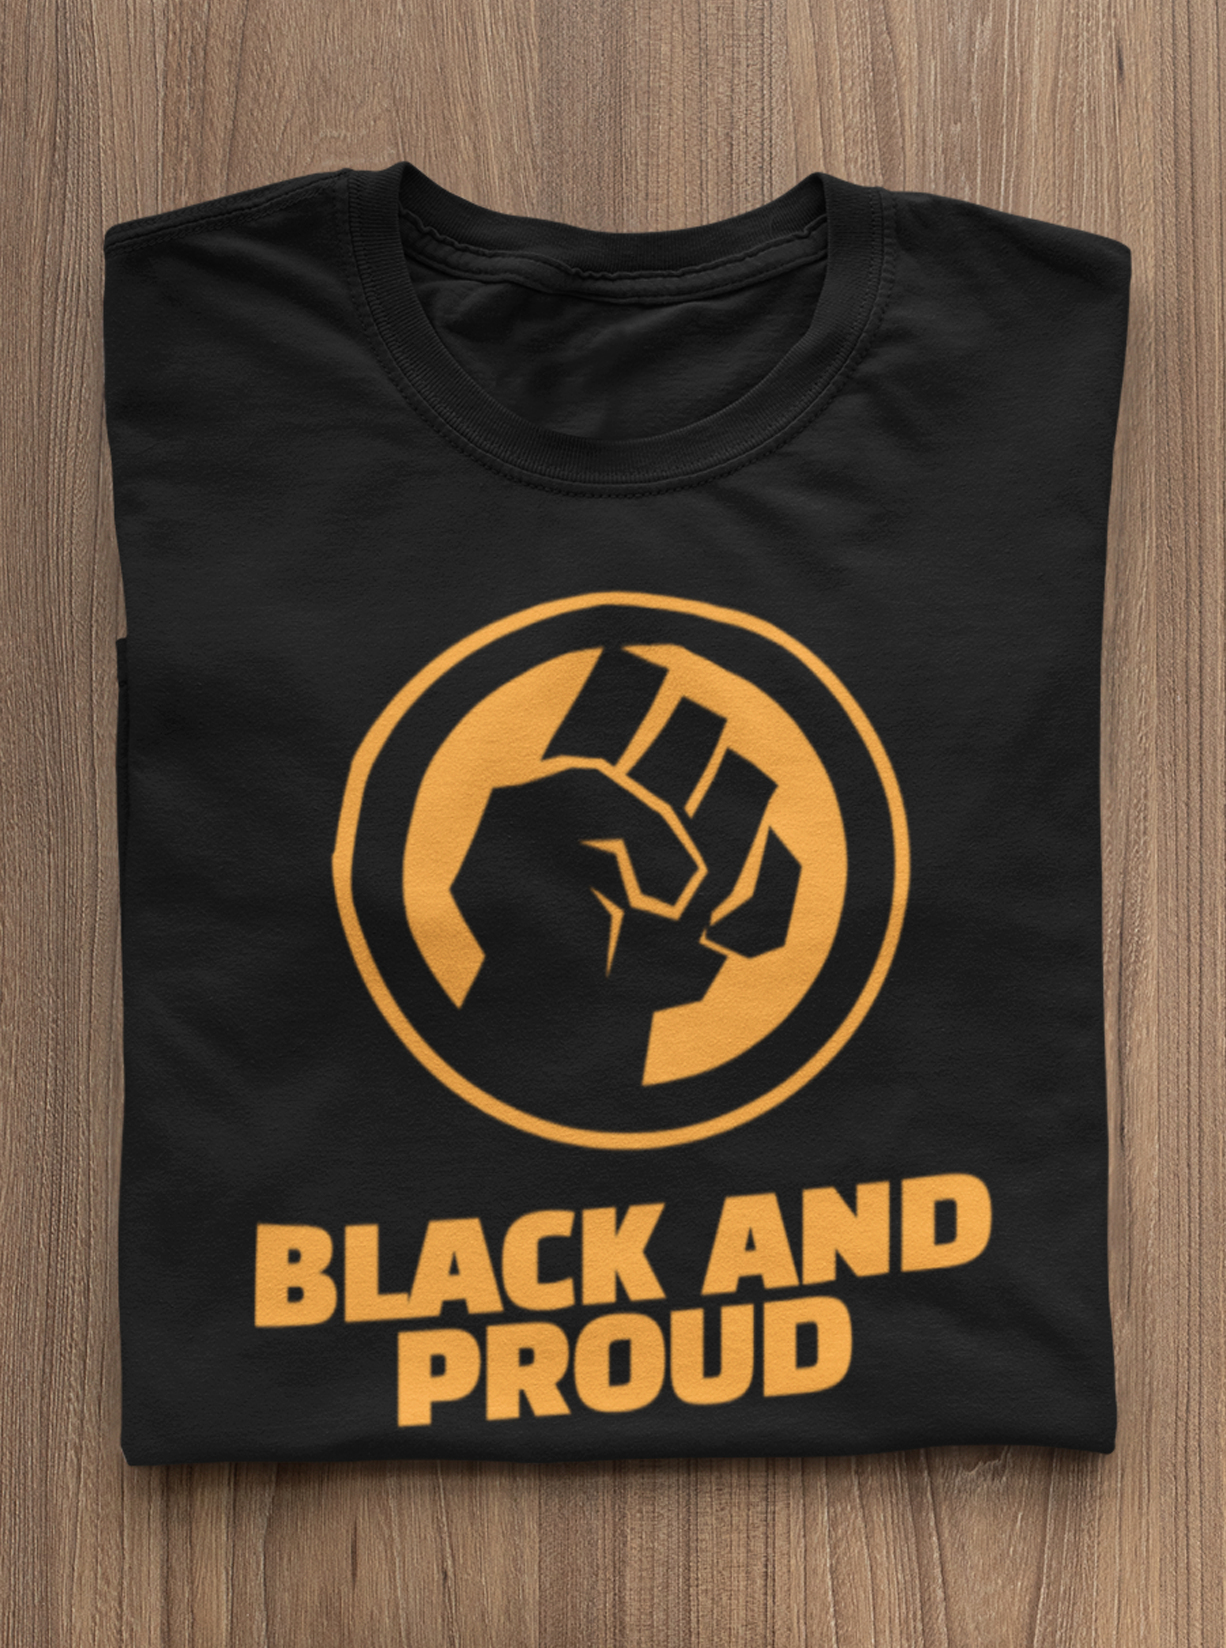 BLACK AND PROUD Unisex T-Shirt